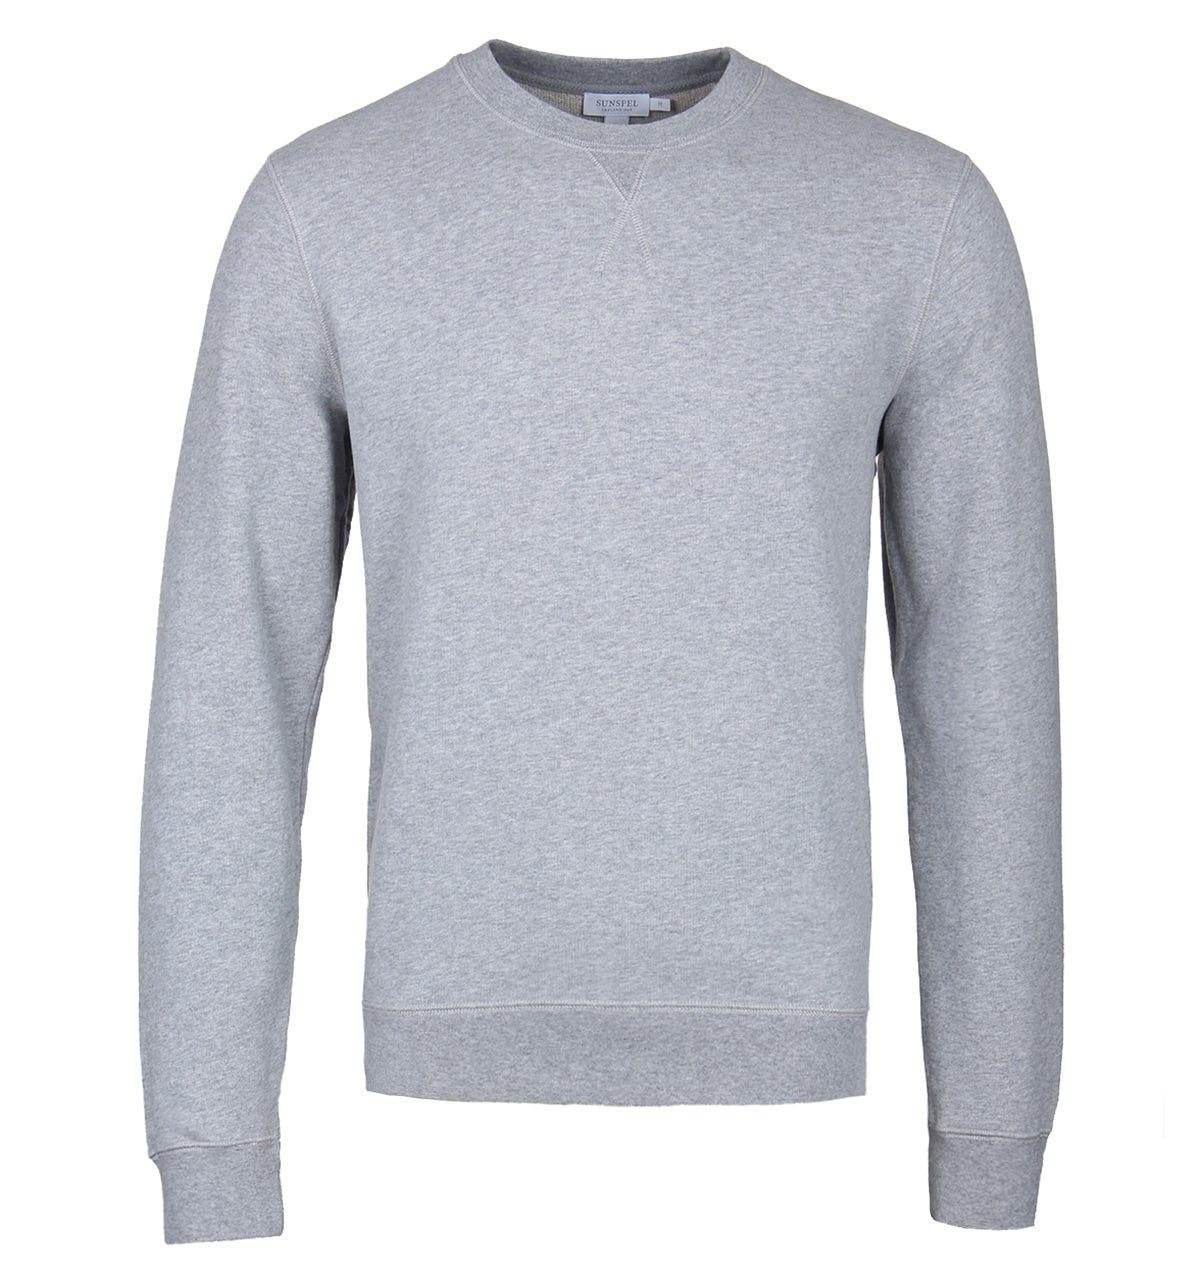 Sunspel Cotton Grey Melange Loopback Sweatshirt in Gray for Men - Lyst